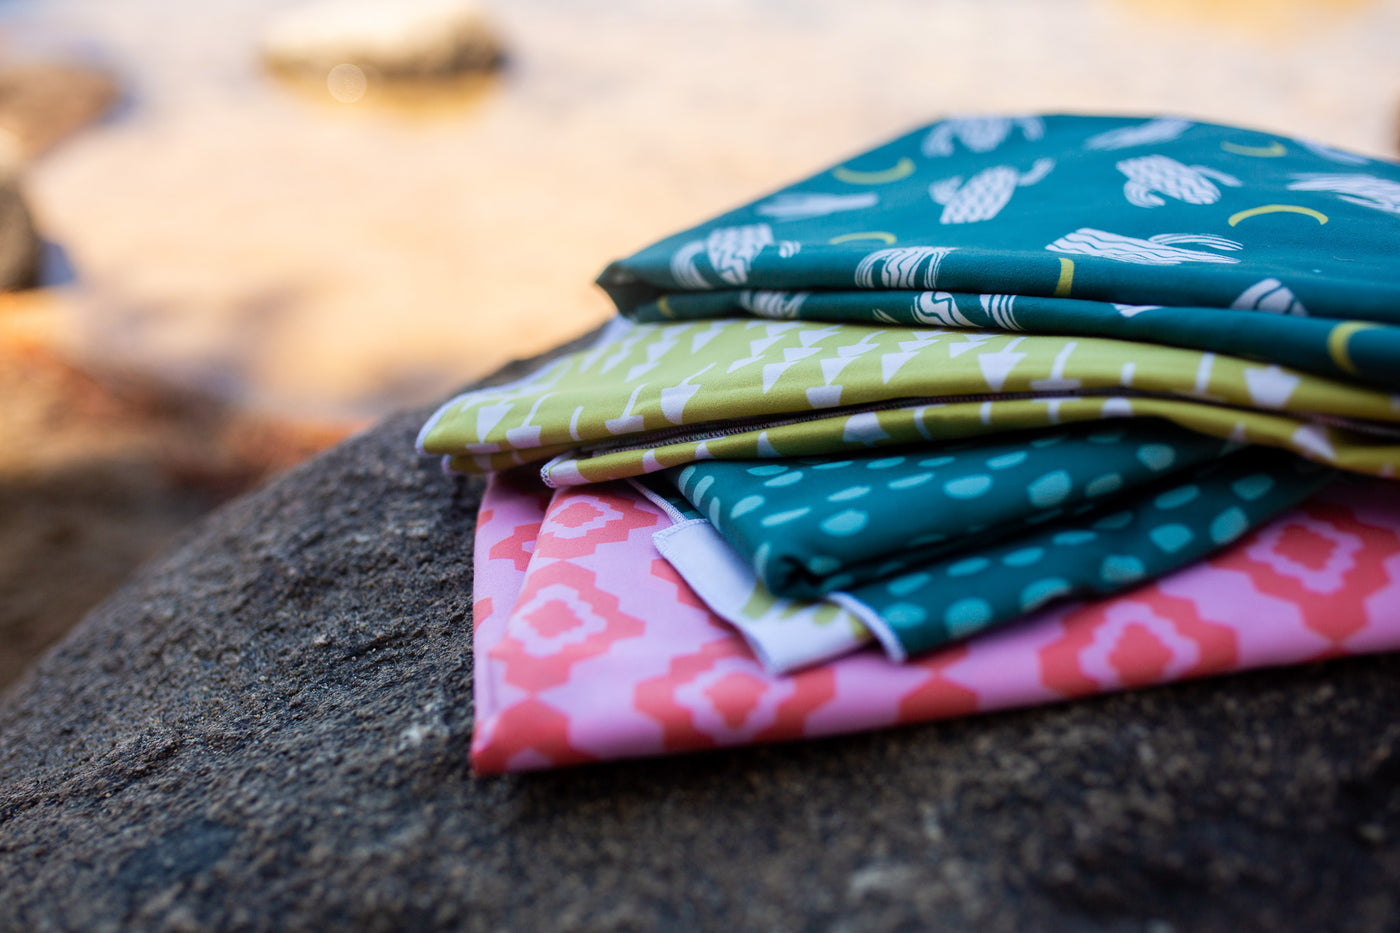 Reversible Strawberry Shortcake / Surf’s Up Blanket Towel